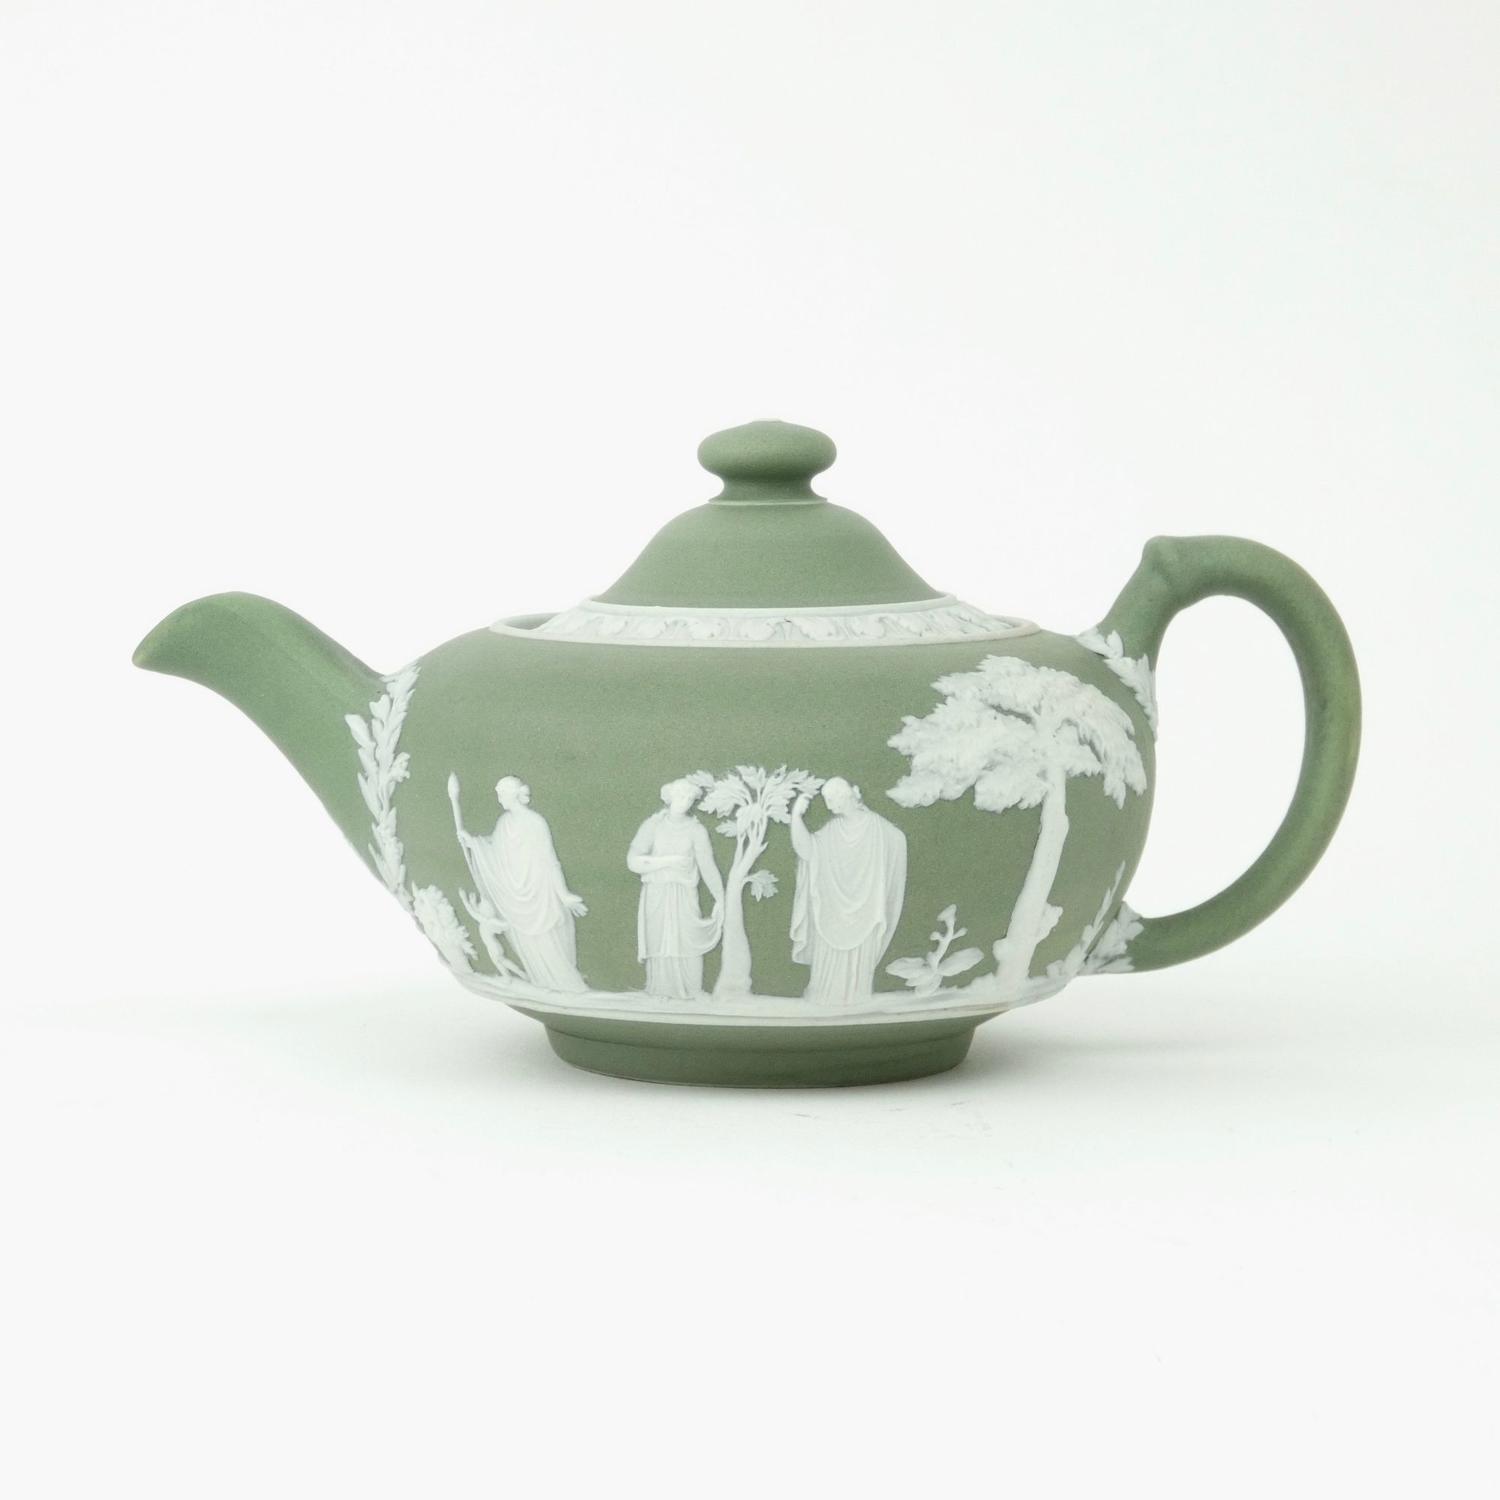 Green jasper teapot